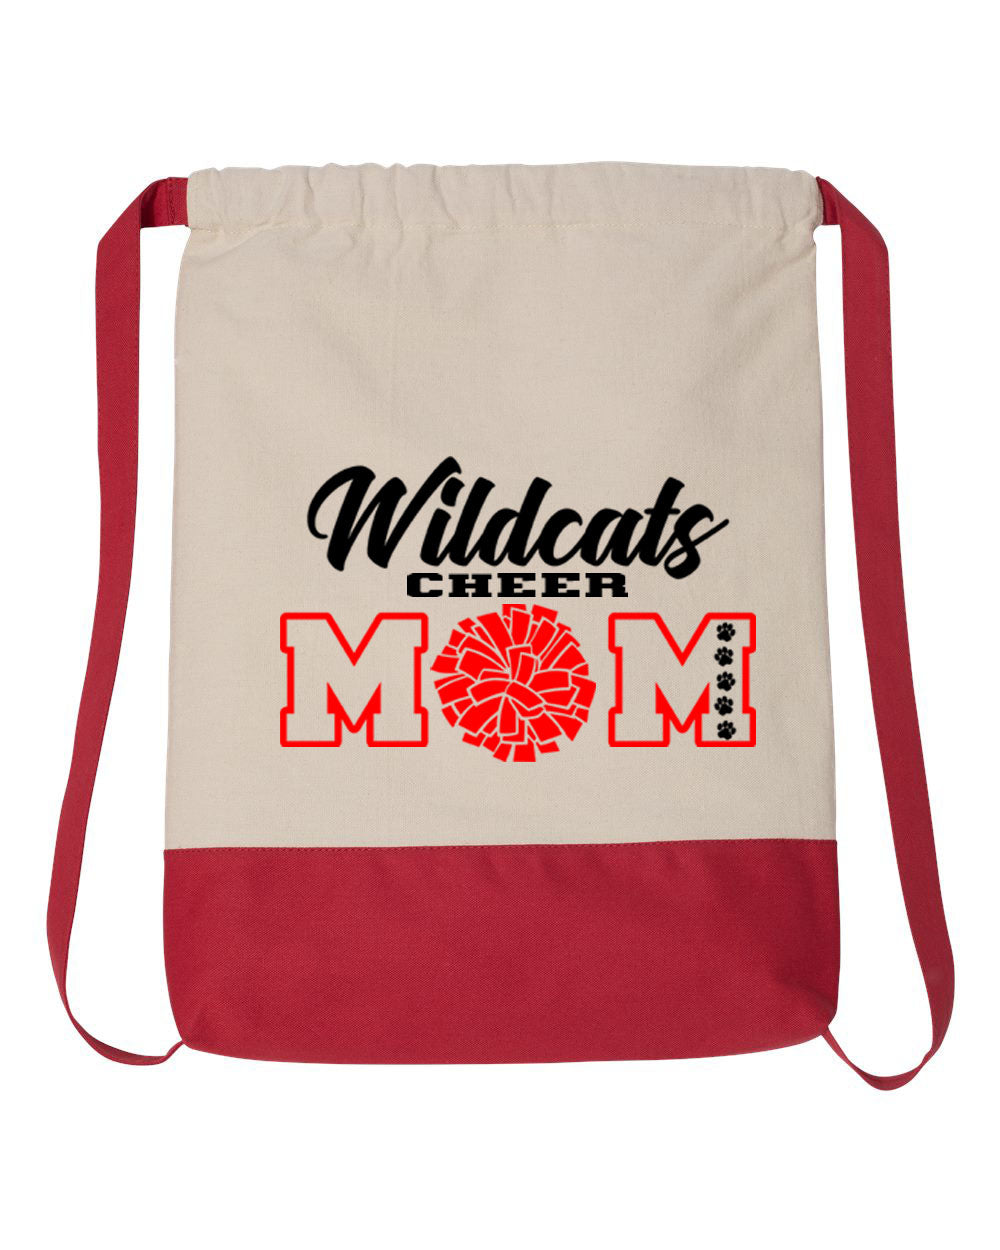 Wildcats Cheer design 7 Drawstring Bag